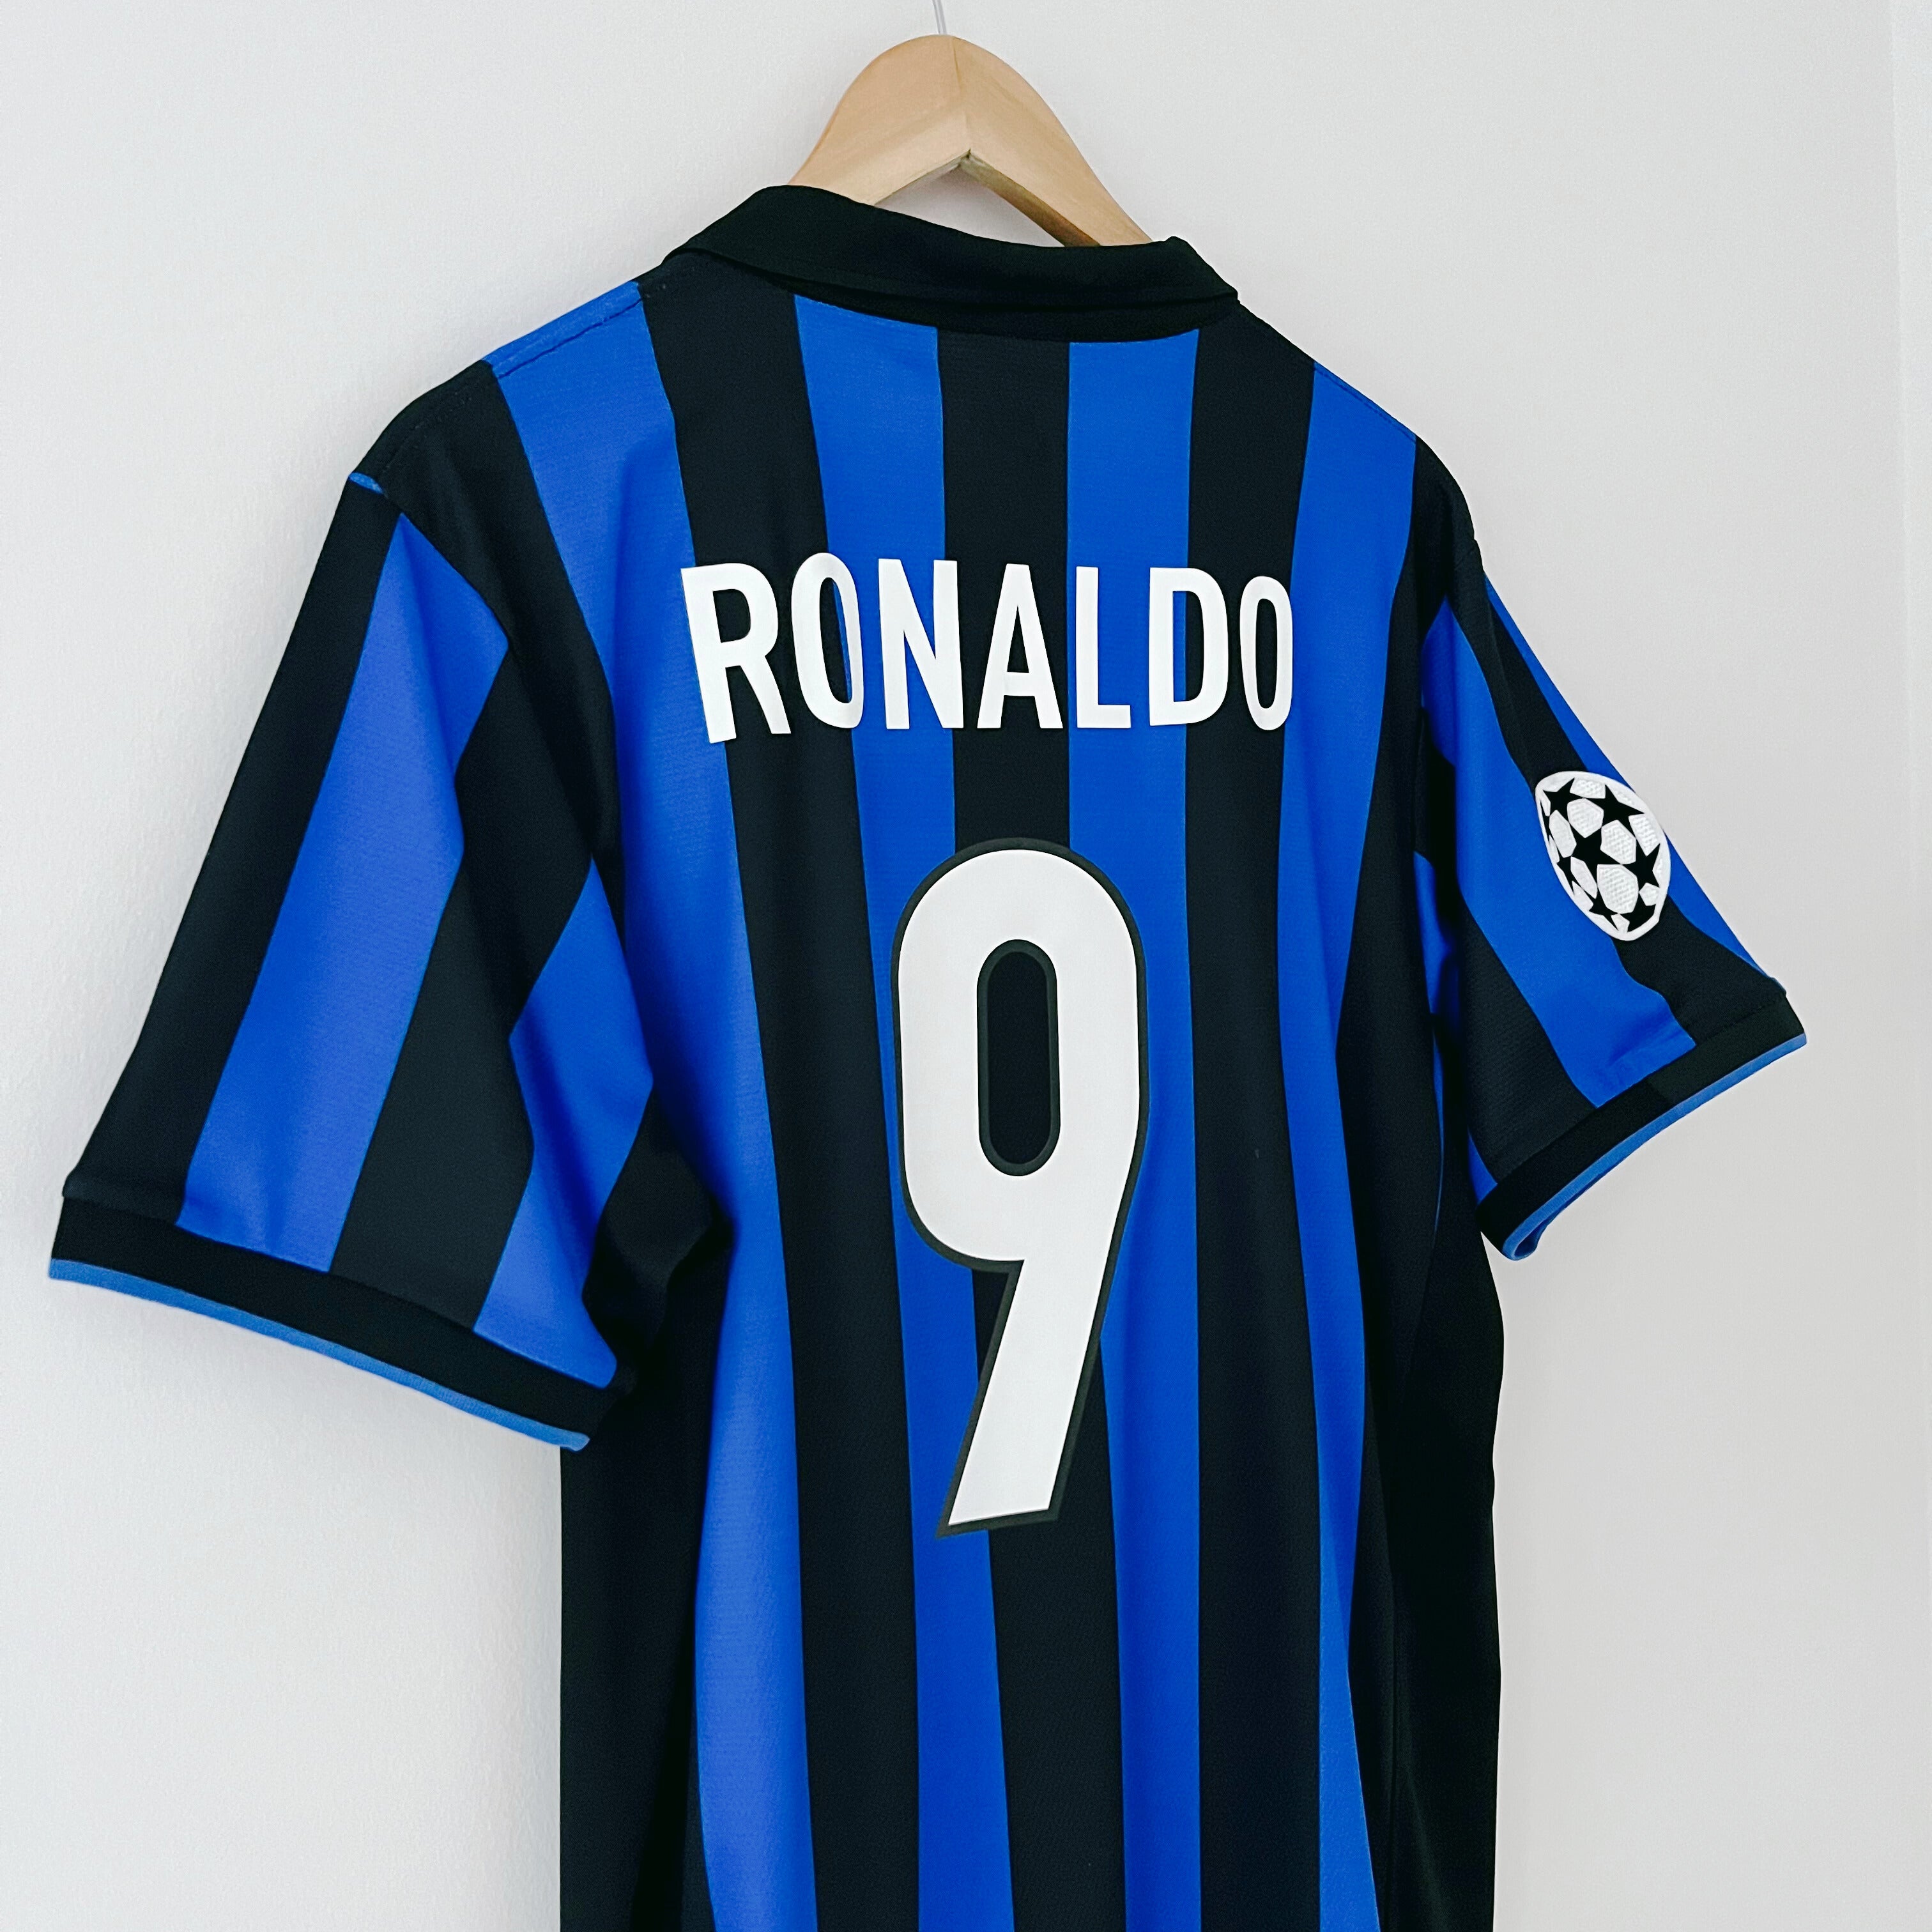 ronaldo 99 jersey